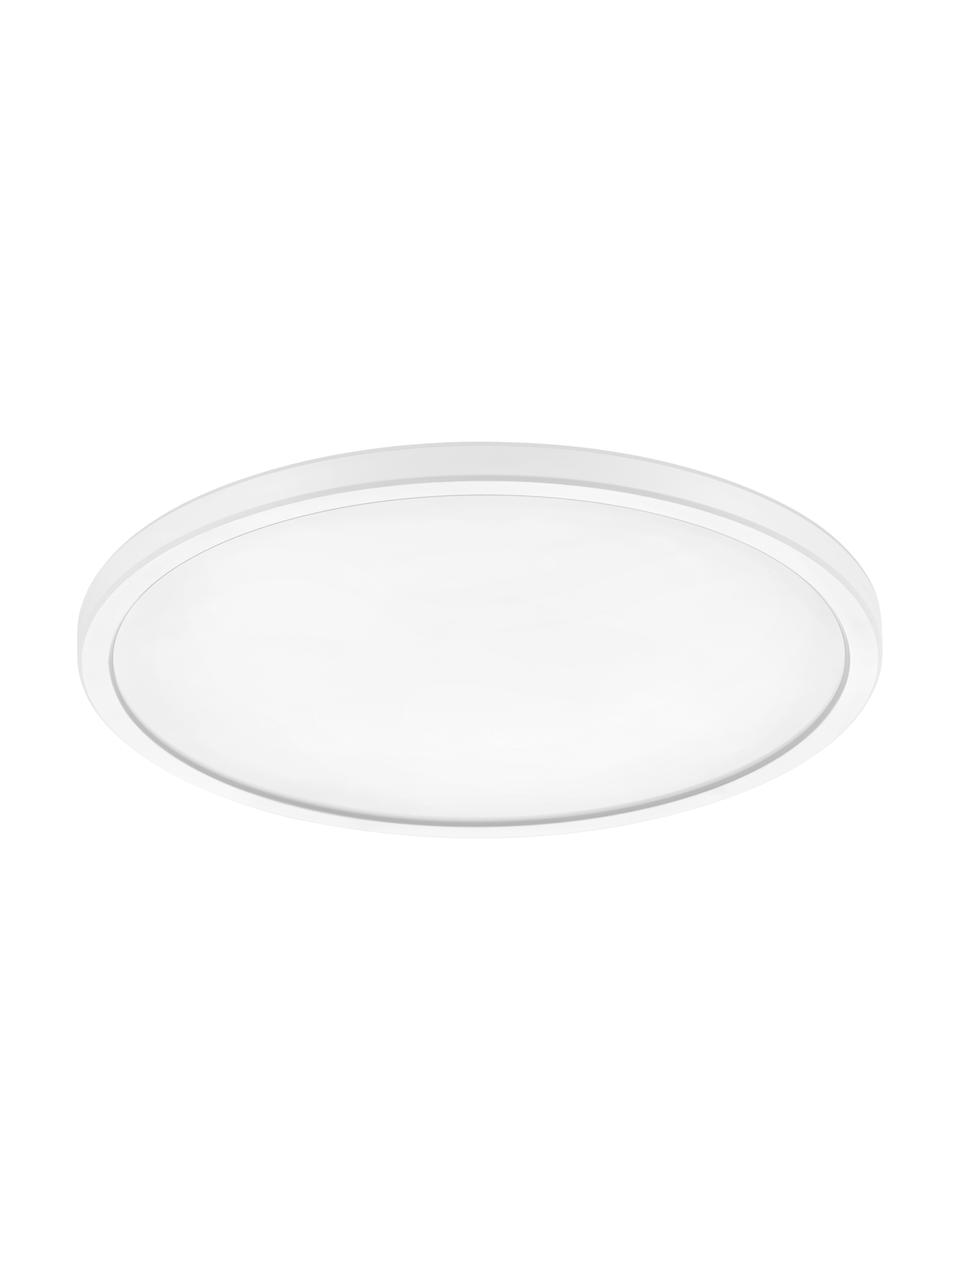 Kleines Dimmbares LED-Panel Oja, Lampenschirm: Kunststoff, Diffusorscheibe: Kunststoff, Weiß, Ø 29 x H 2 cm